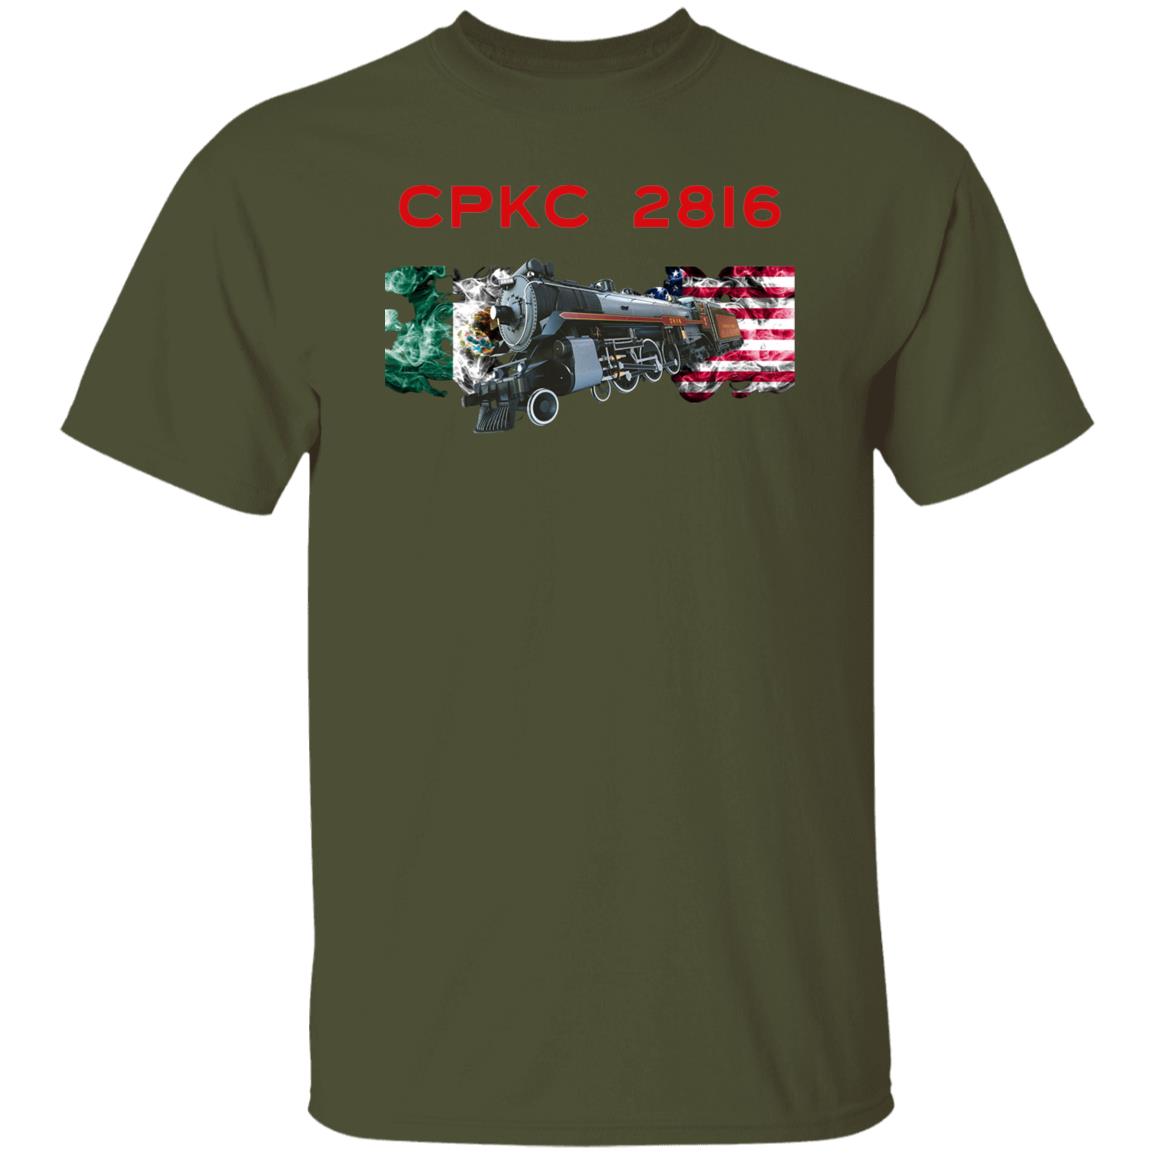 CPKC 2816 w/ USA/MEX Flag Heavyweight Classic  T-Shirt